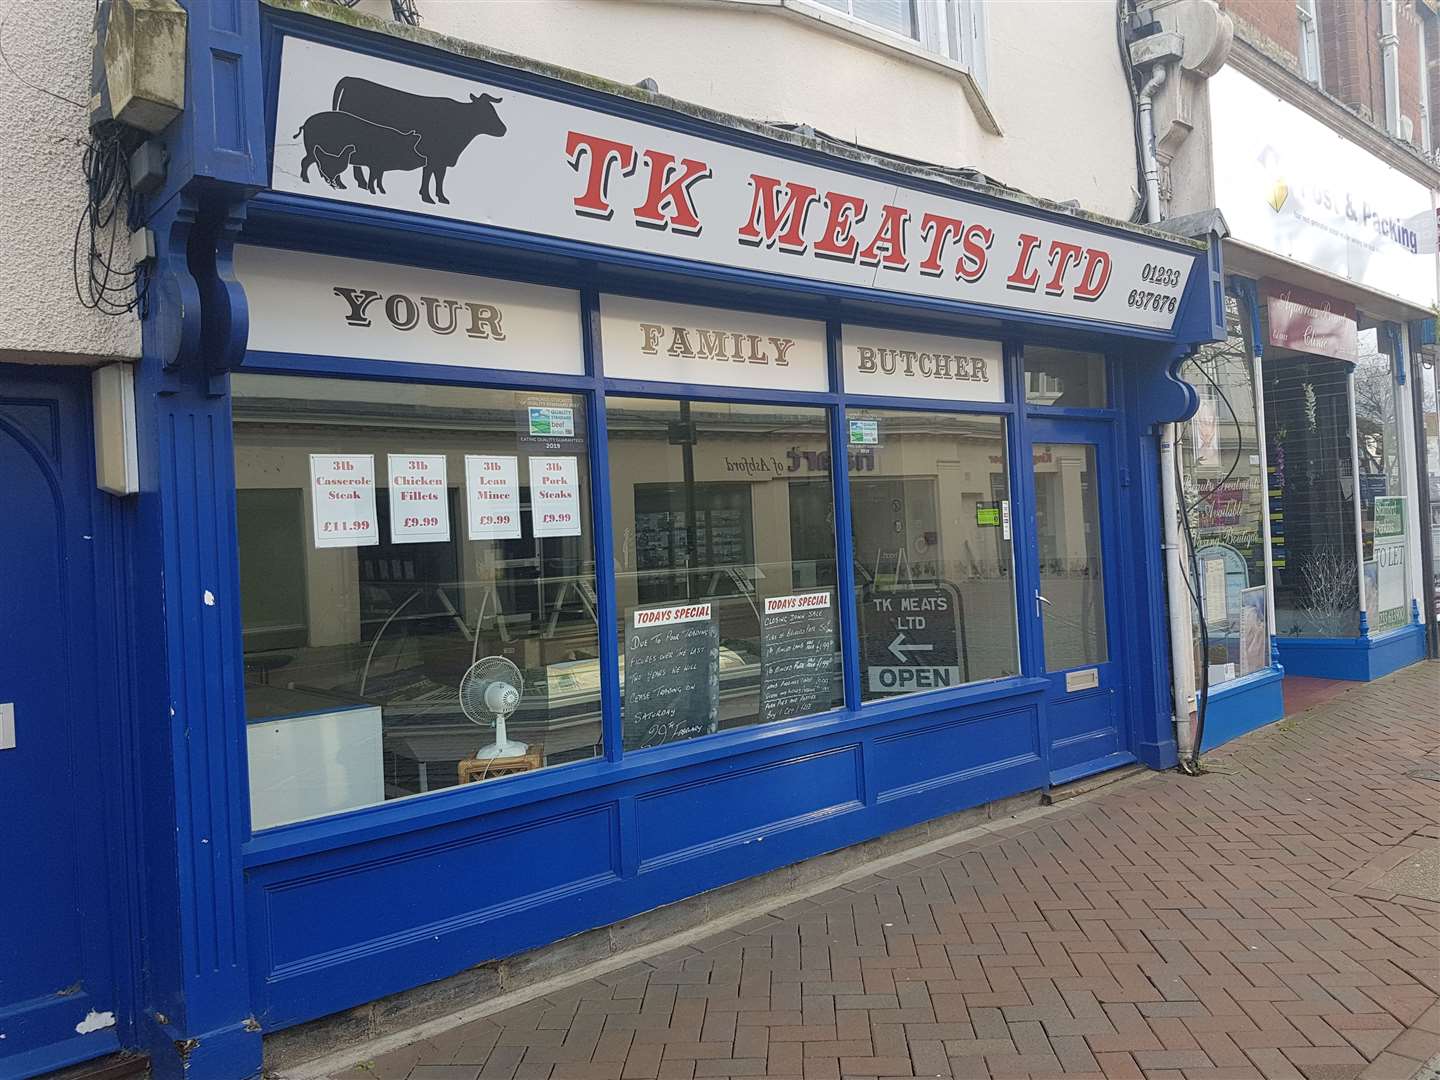 TK Meats in Ashford, run by Tony Killingbeck, closed in November 2020